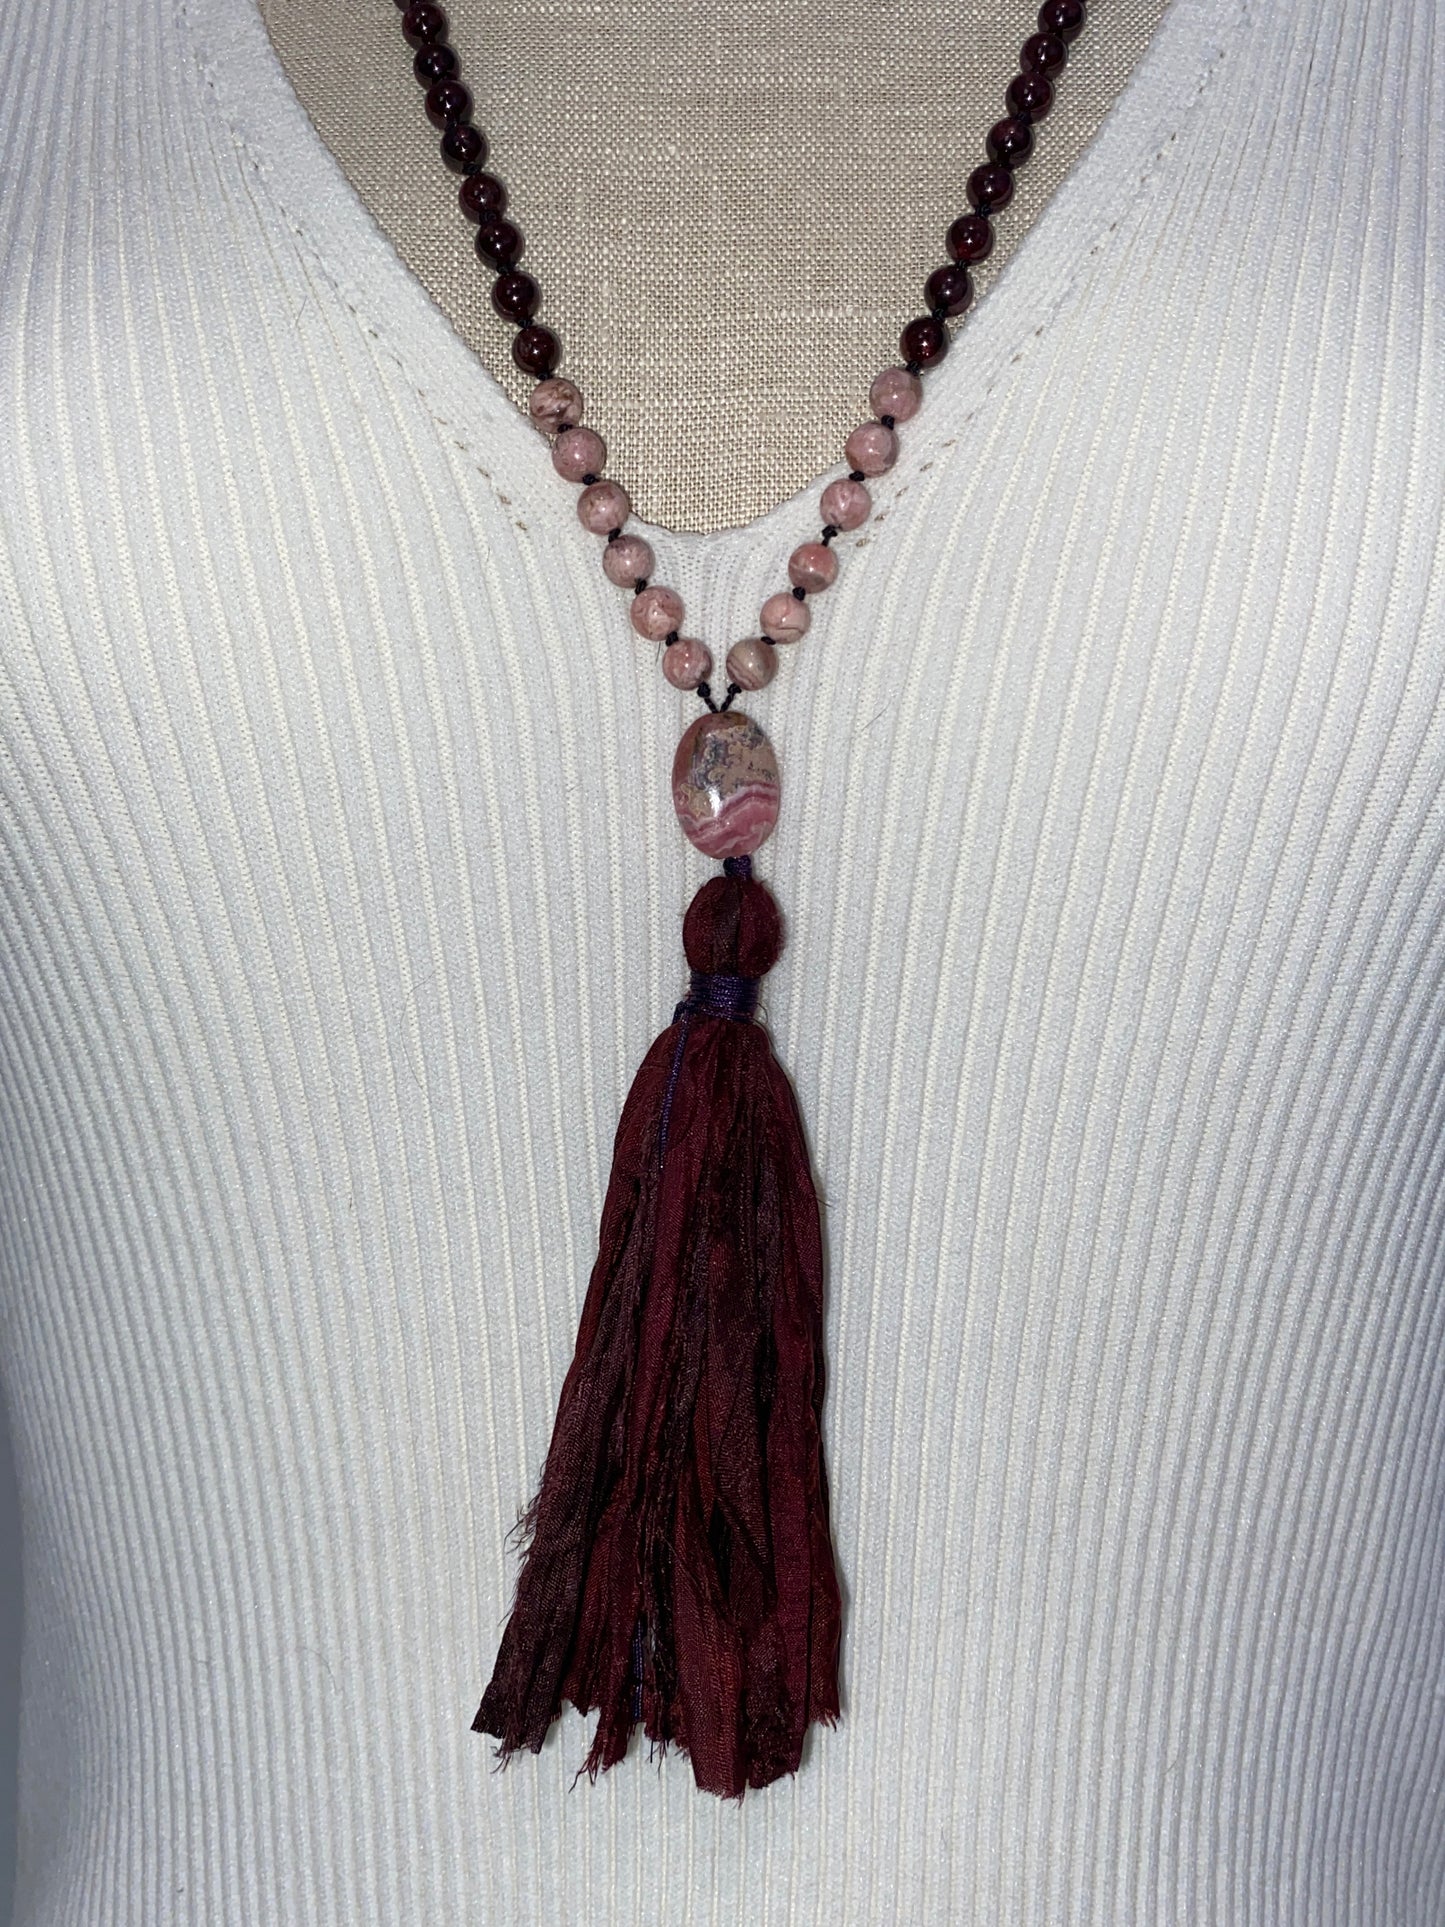 Garnet / Rhodochrosite Beaded Necklace and Bracelet